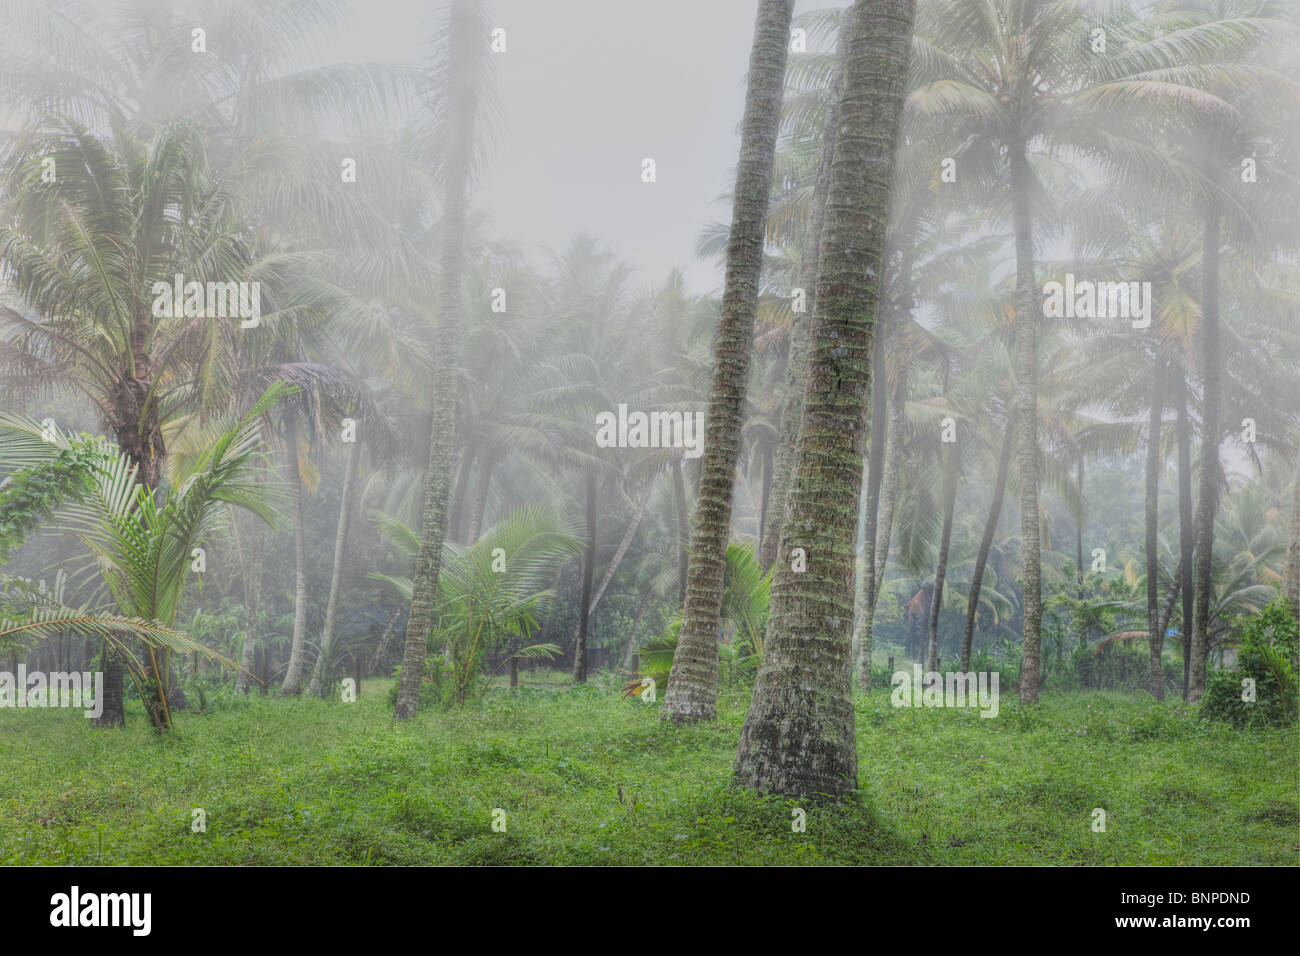 Hohen Kokospalmen in Nebel gehüllt. Kochi, Kerala, Indien. Digital Composite Stockfoto